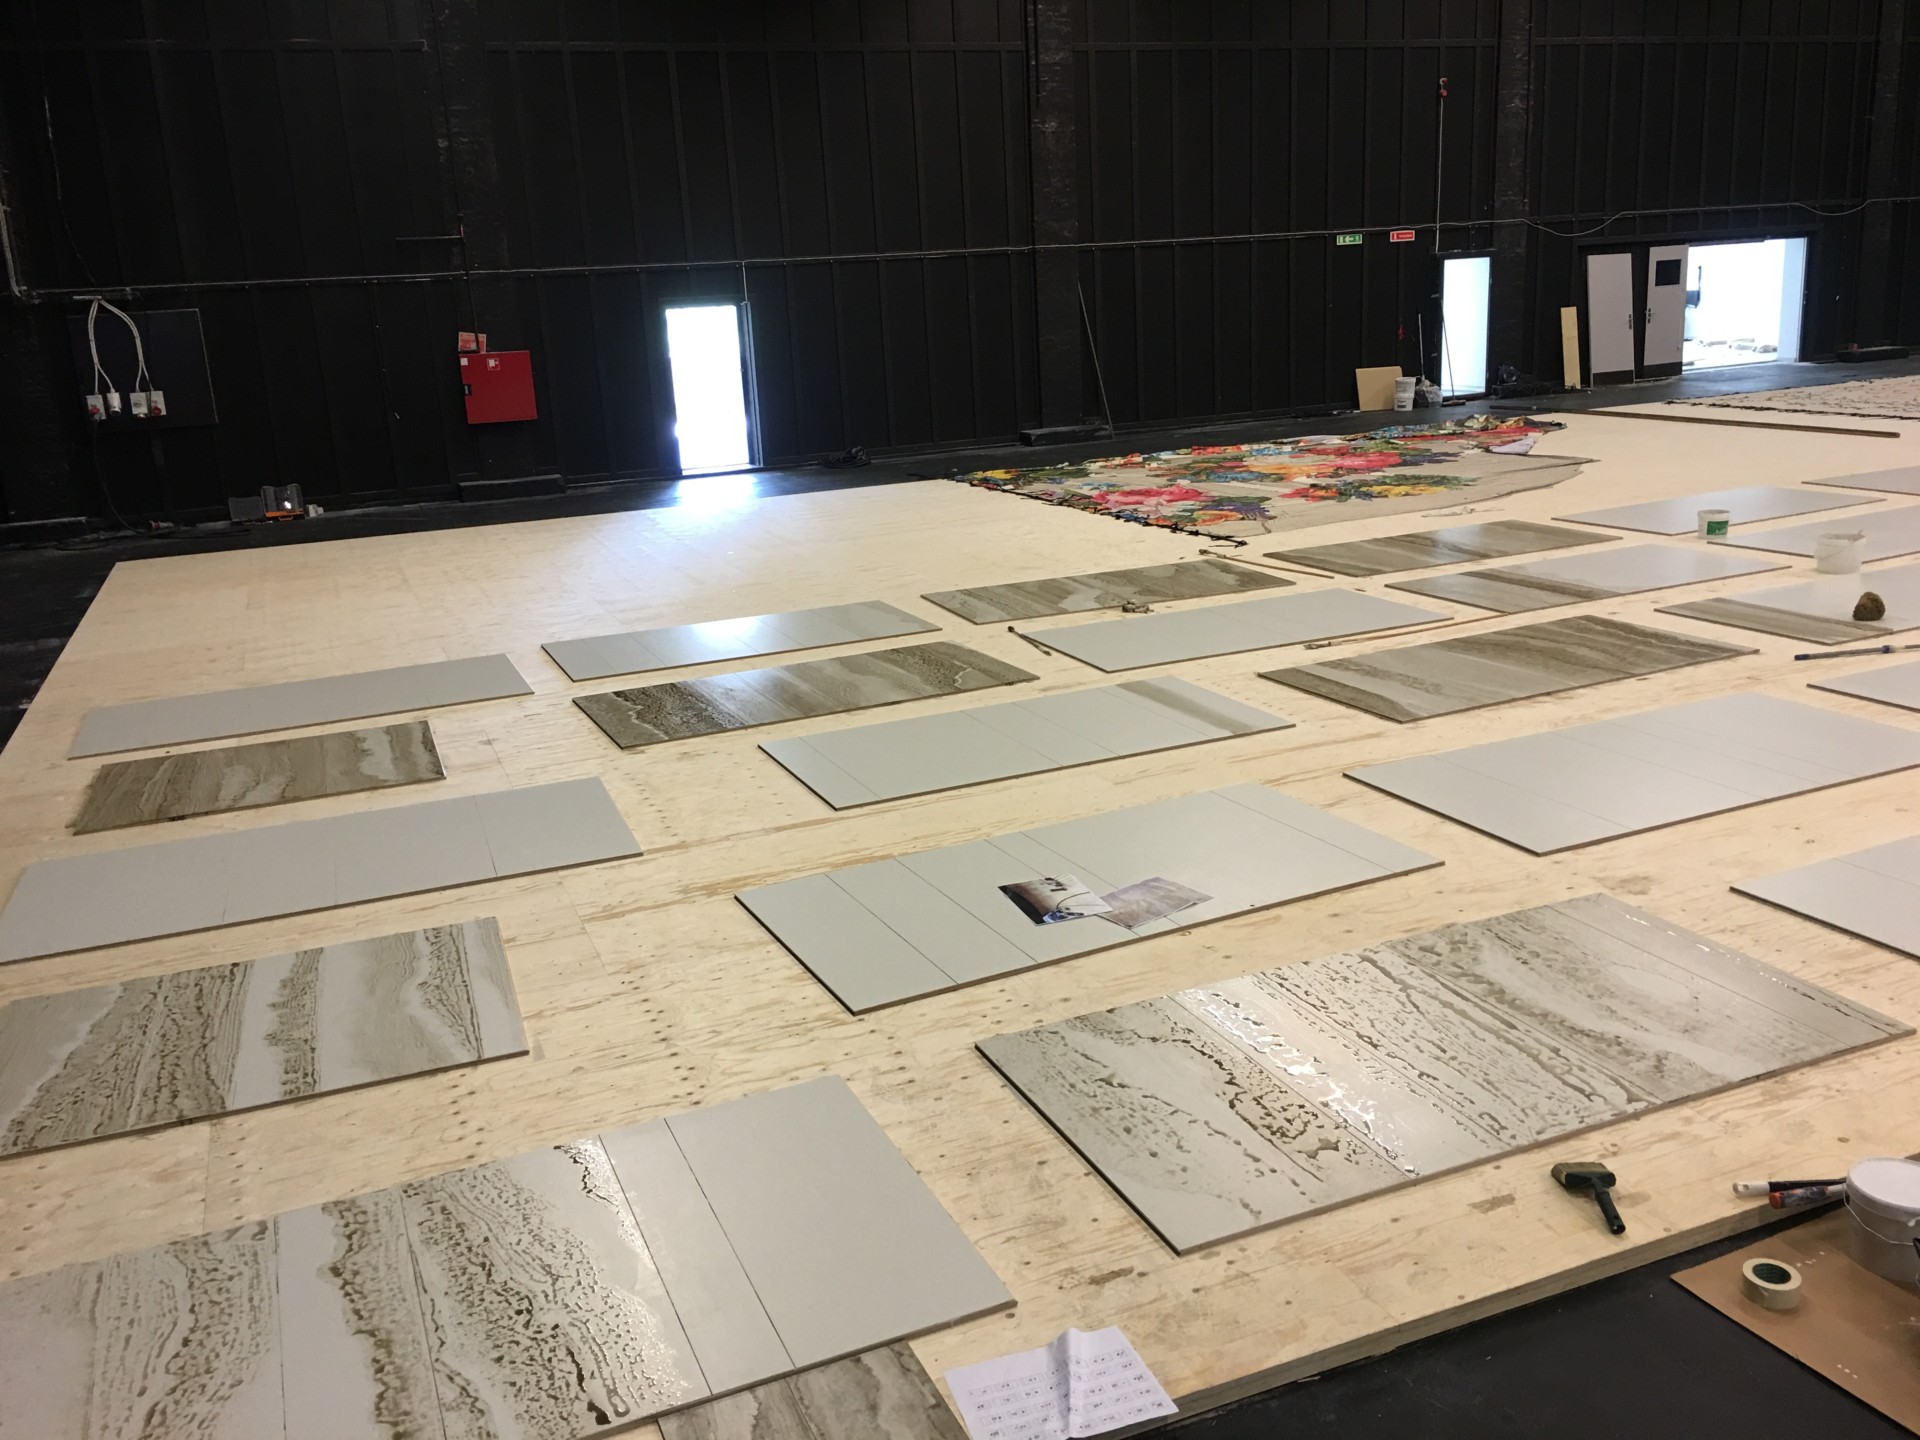 Molly Kyhl marbled floor – the opera house